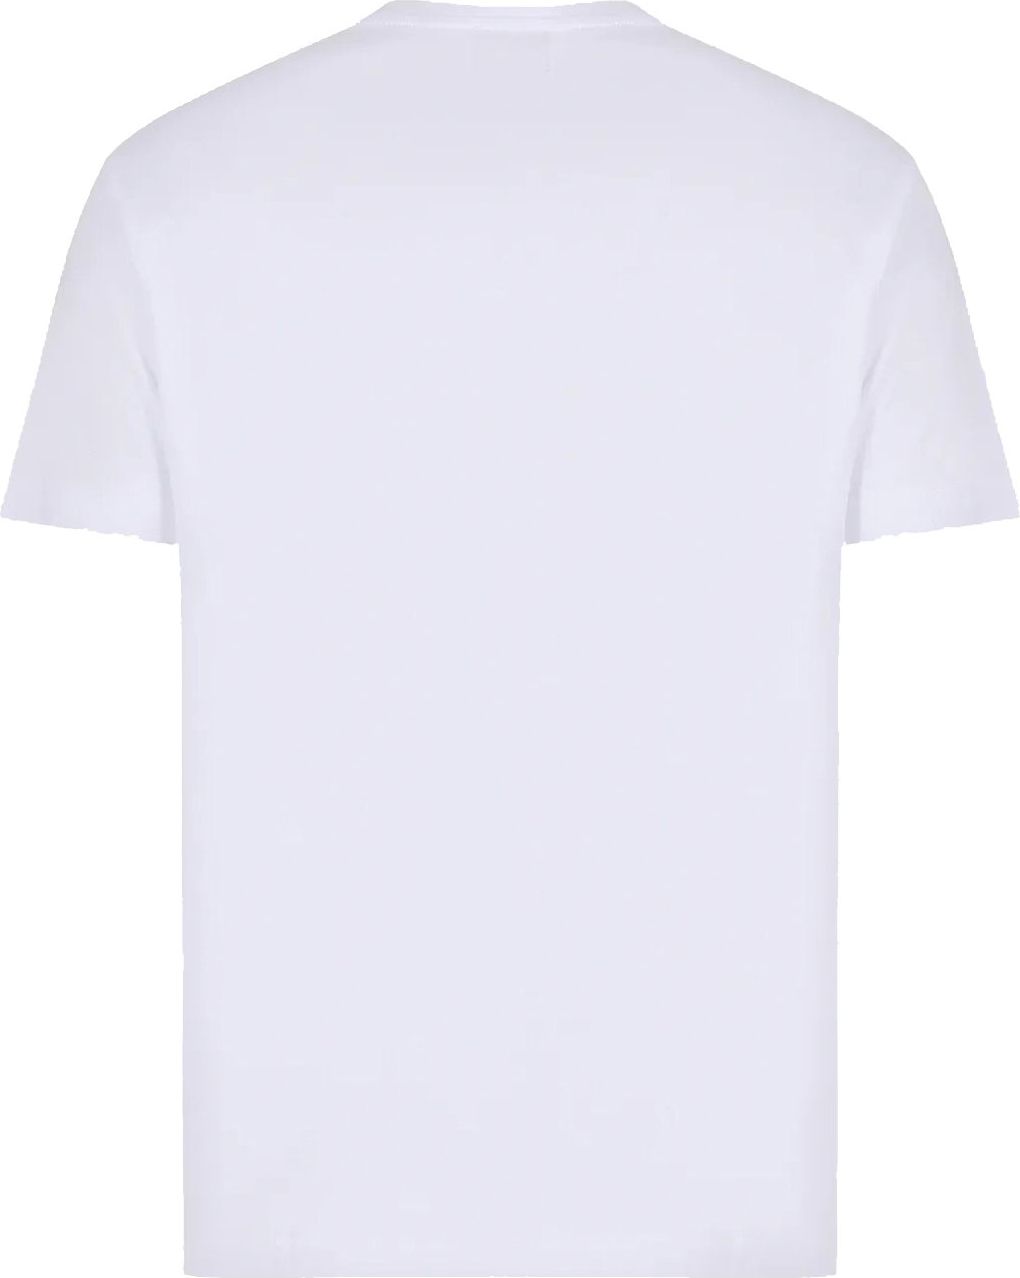 EA7 Armani Ea7 Heren T-shirt Wit 6RPT19-PJM9Z/1100 Wit